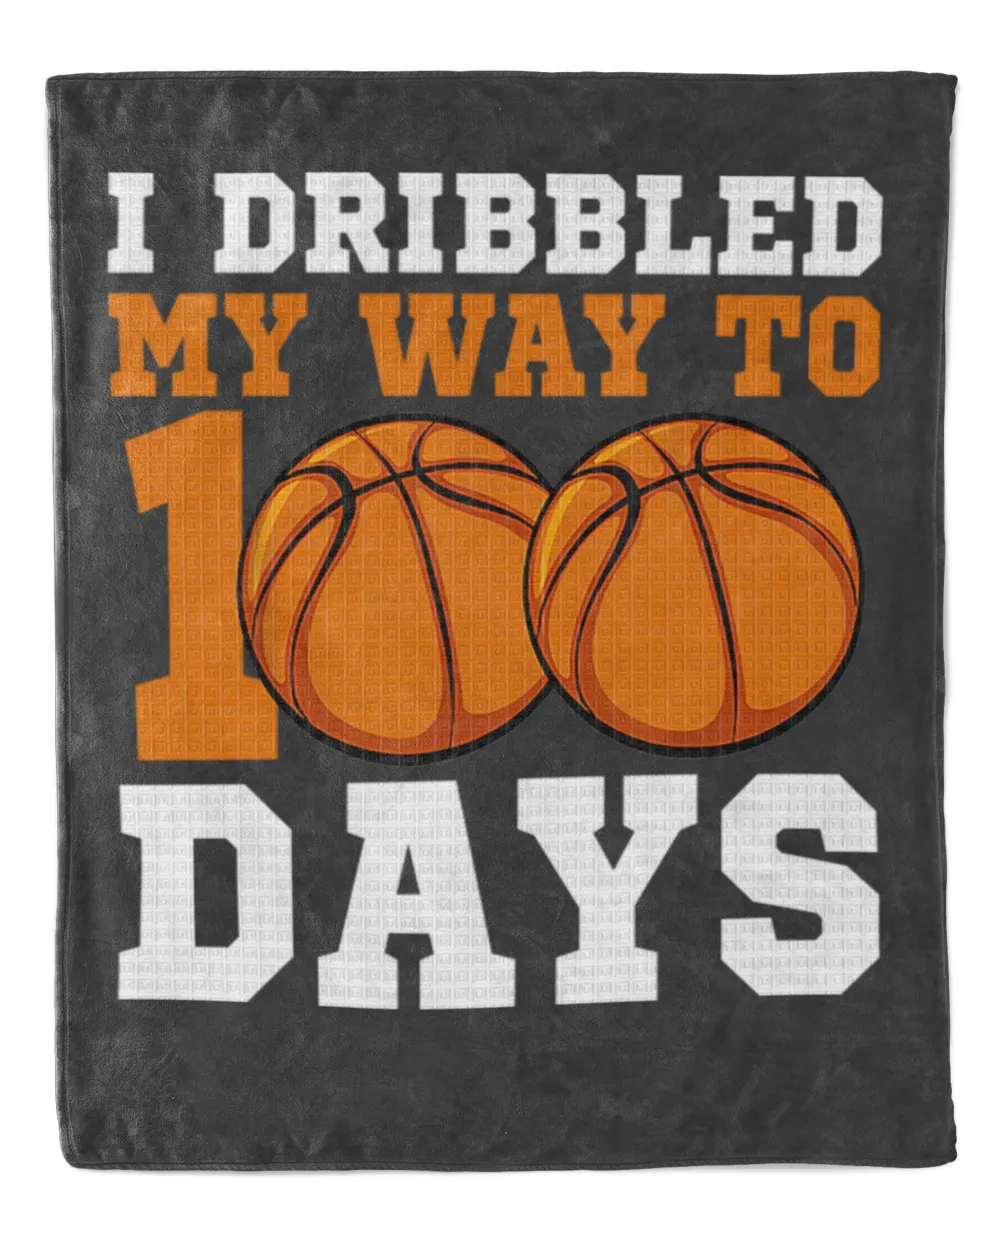 100 Days Of School Survivor T-ShirtI Dribbled My Way To 100 Days Basketball 100th Day Of School T-Shirt_by Laelia Keelin_ copy